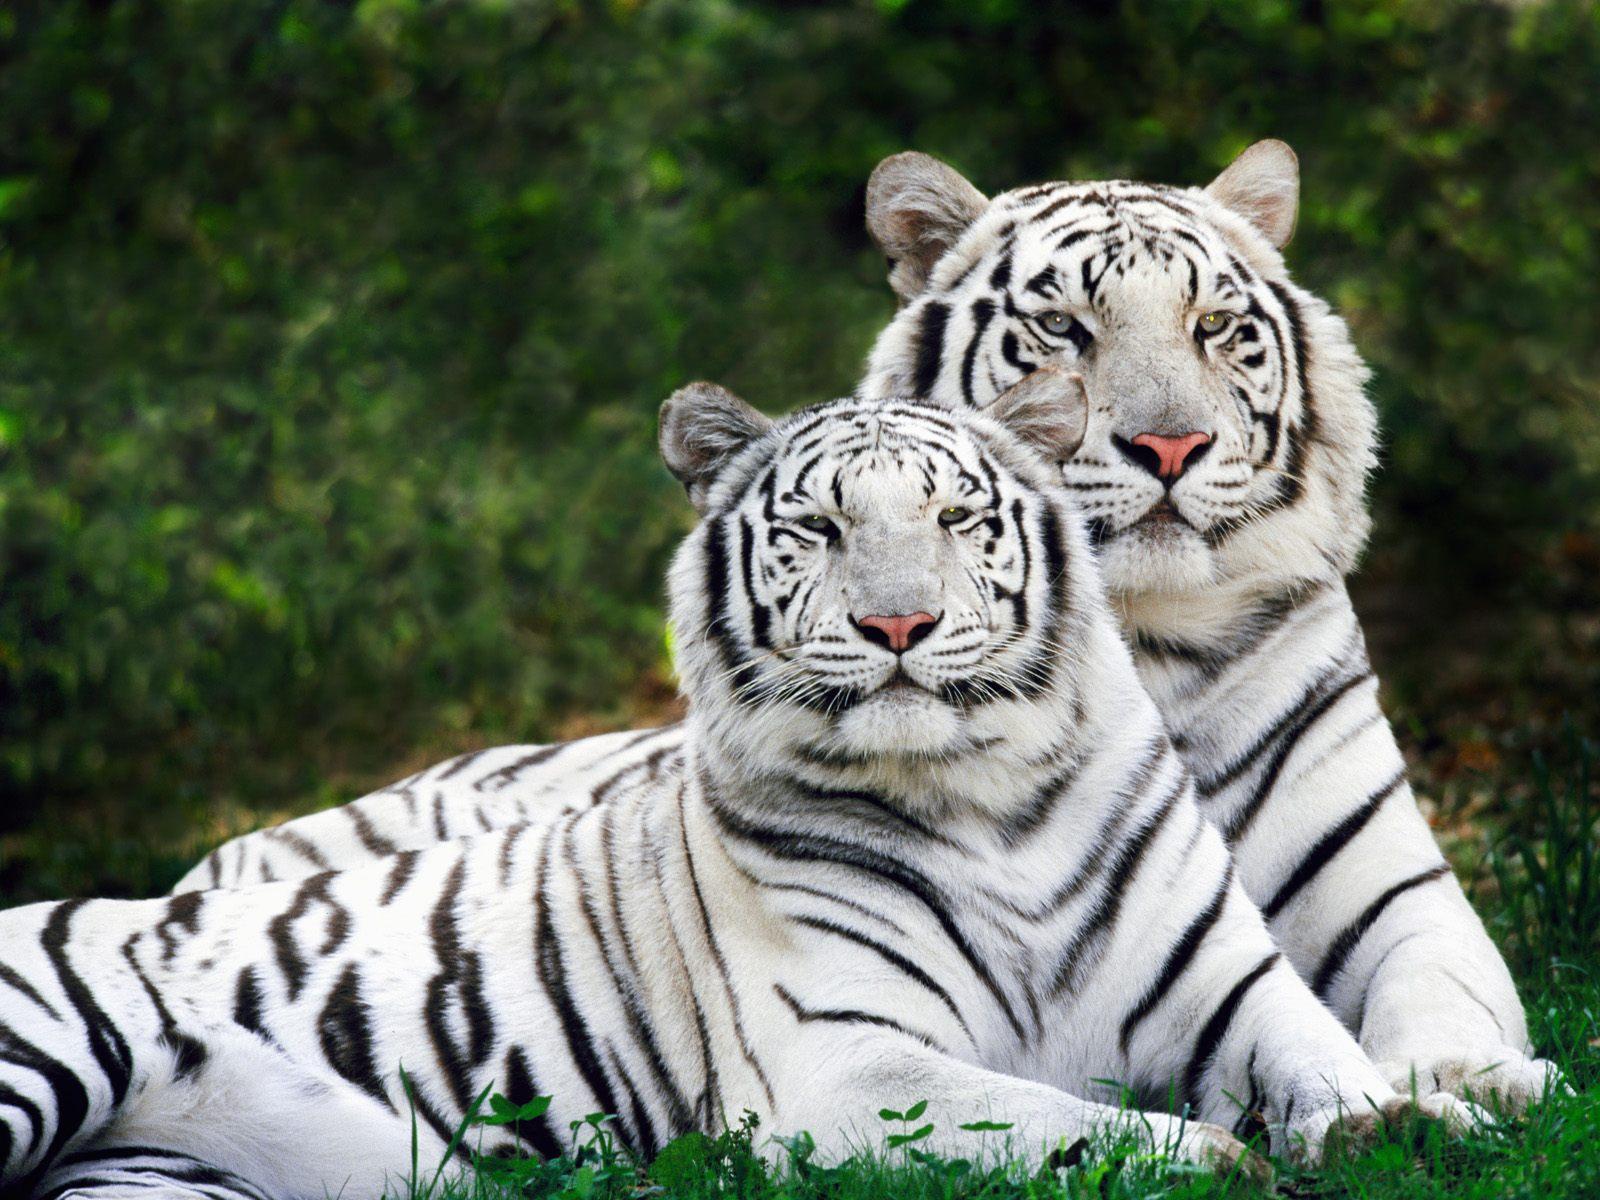 White tigers photo free desktop background wallpaper image